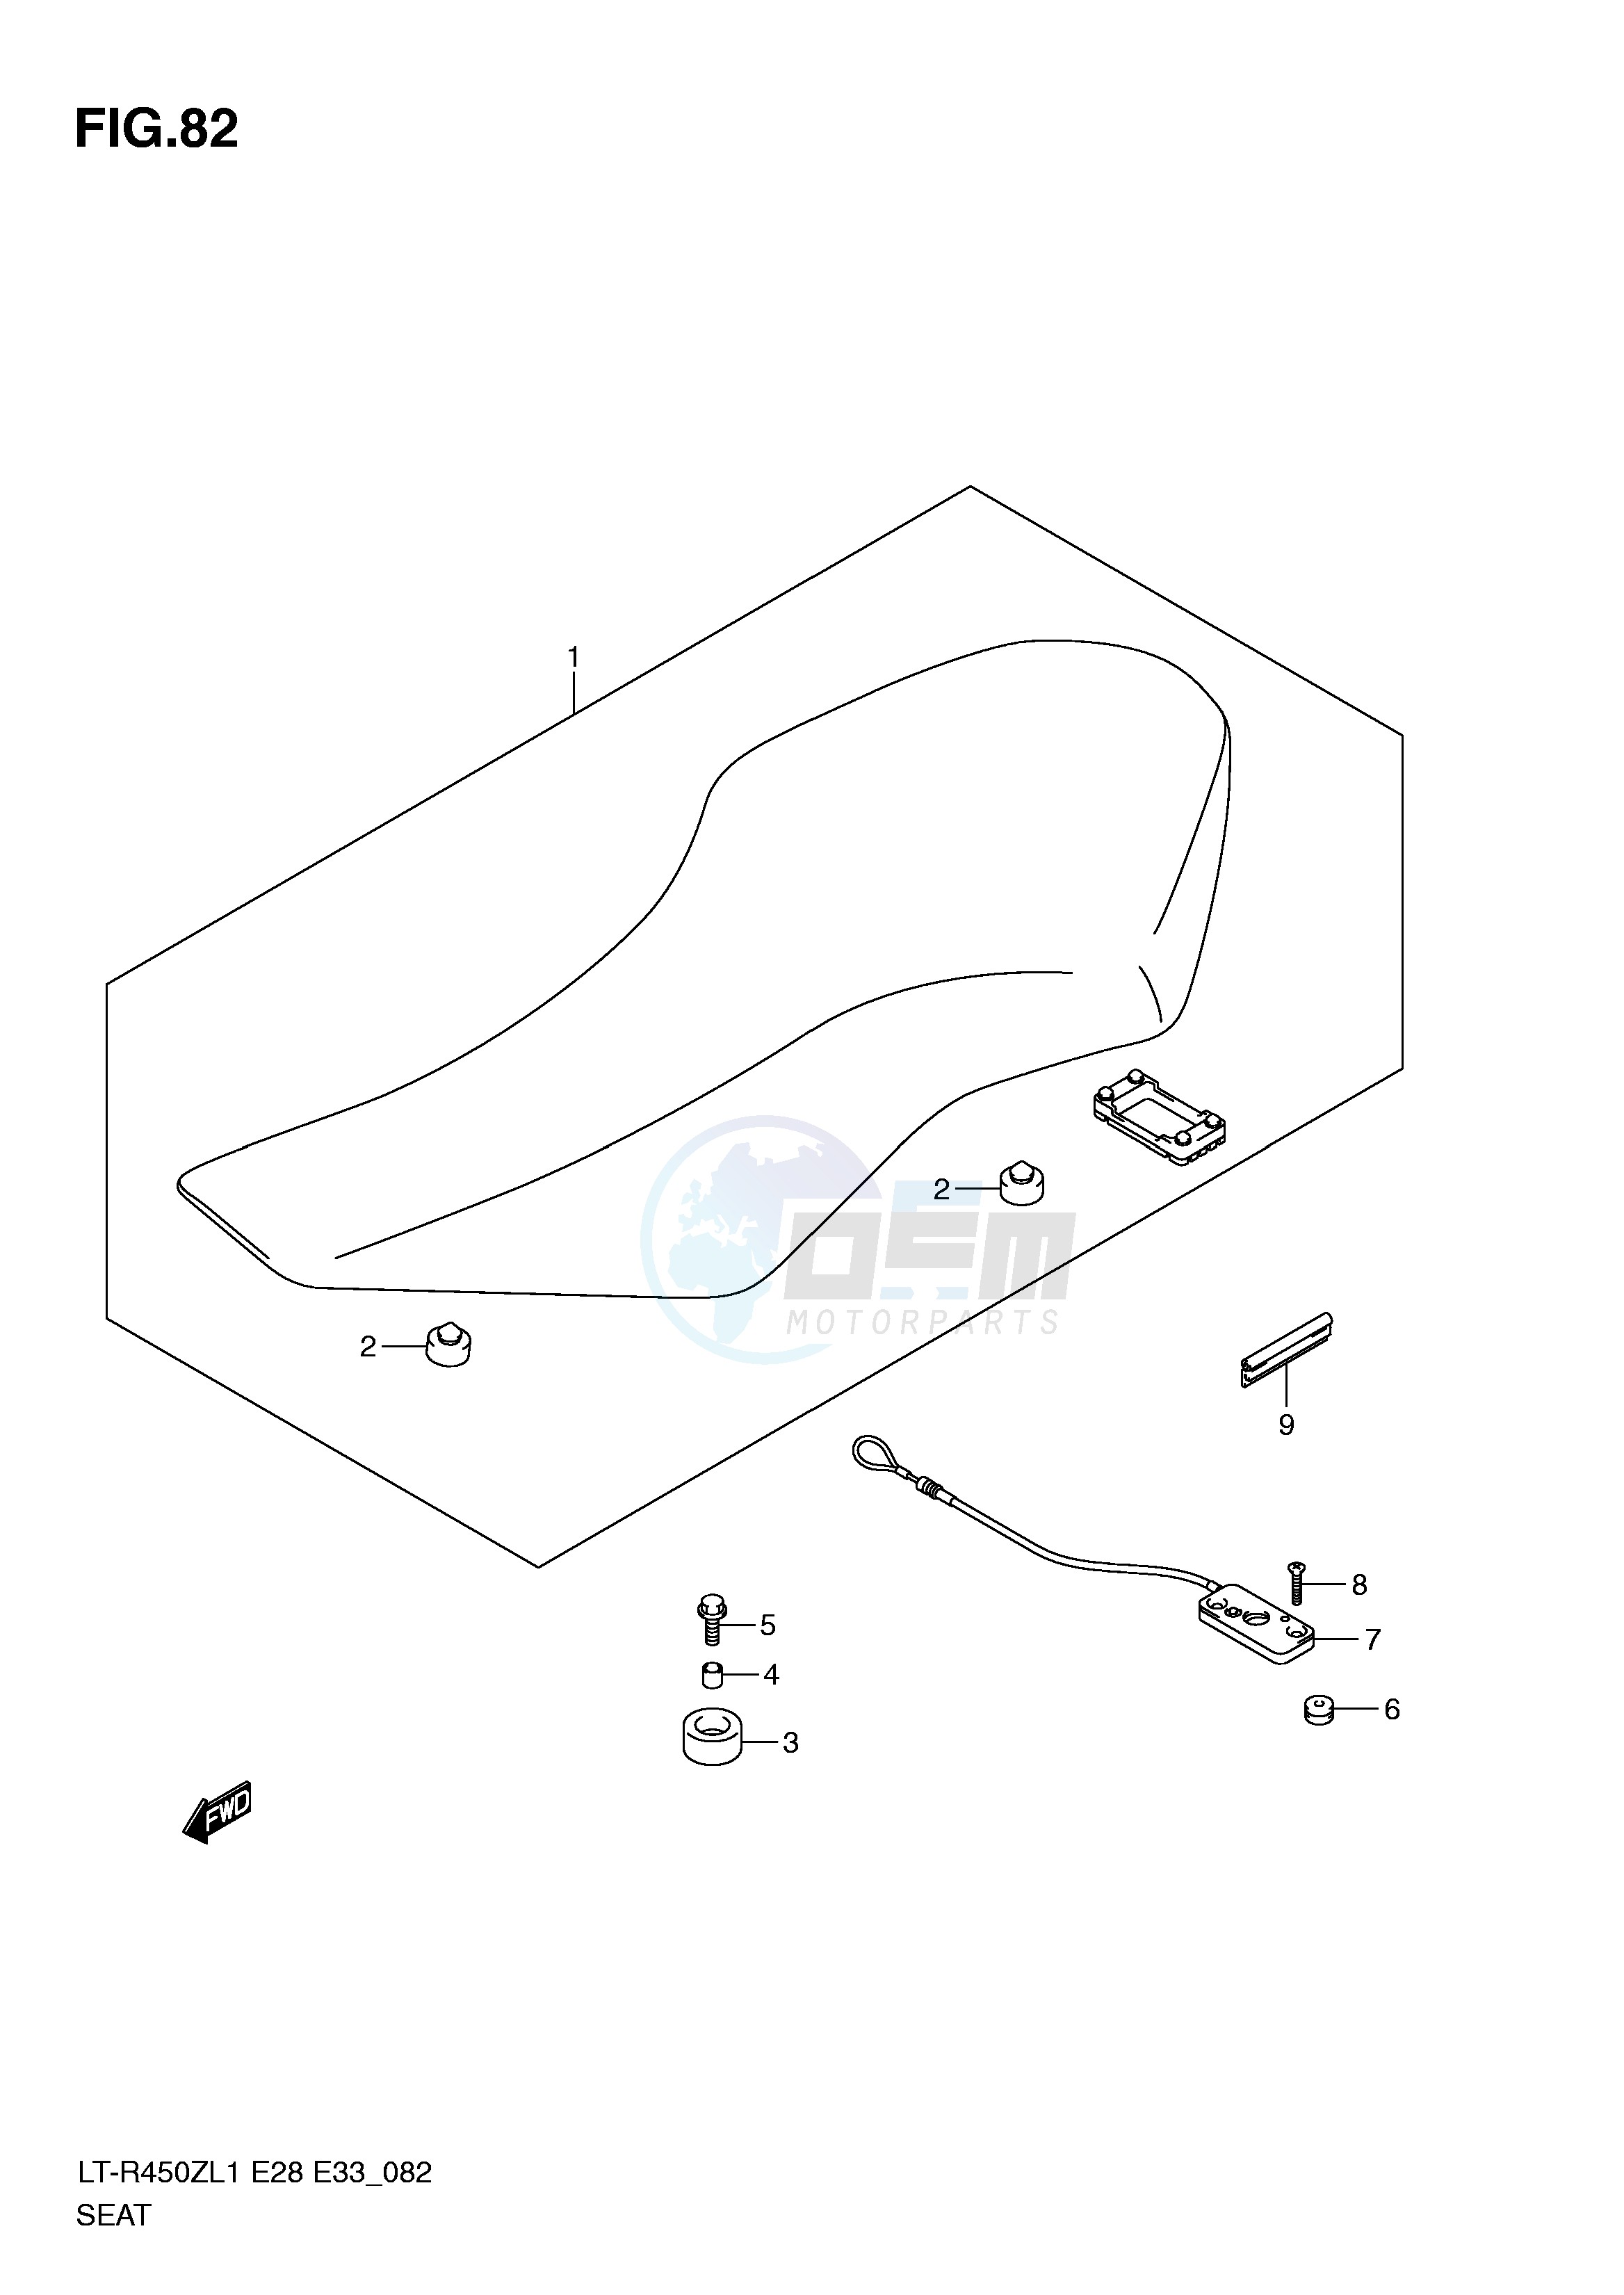 SEAT (LT-R450ZL1 E28) blueprint